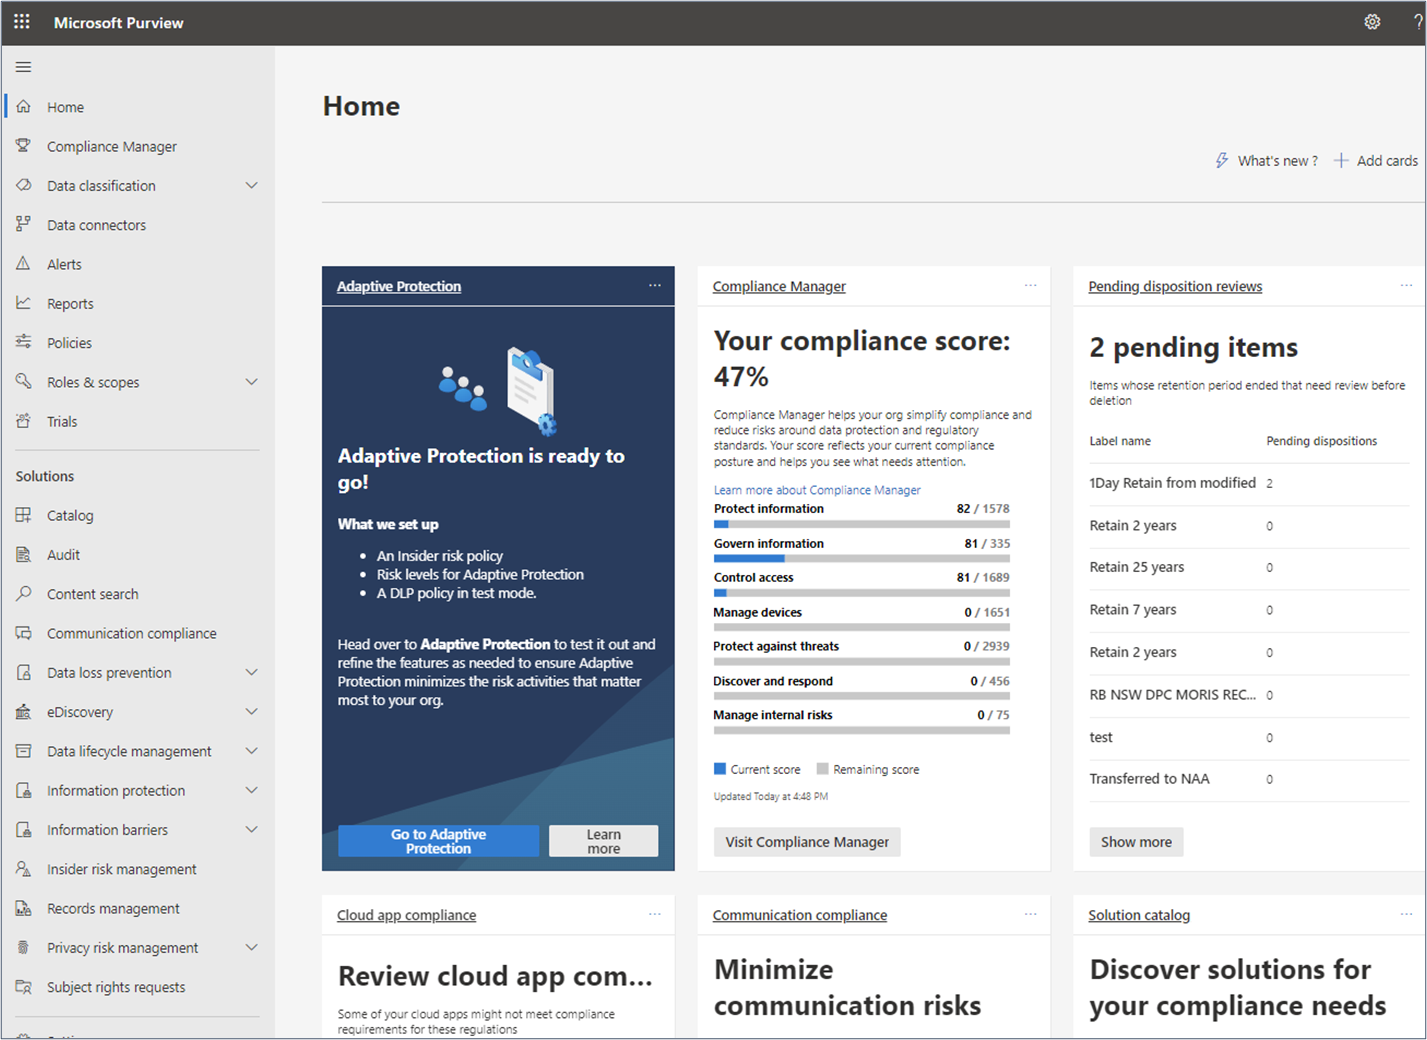 The Microsoft Purview compliance portal